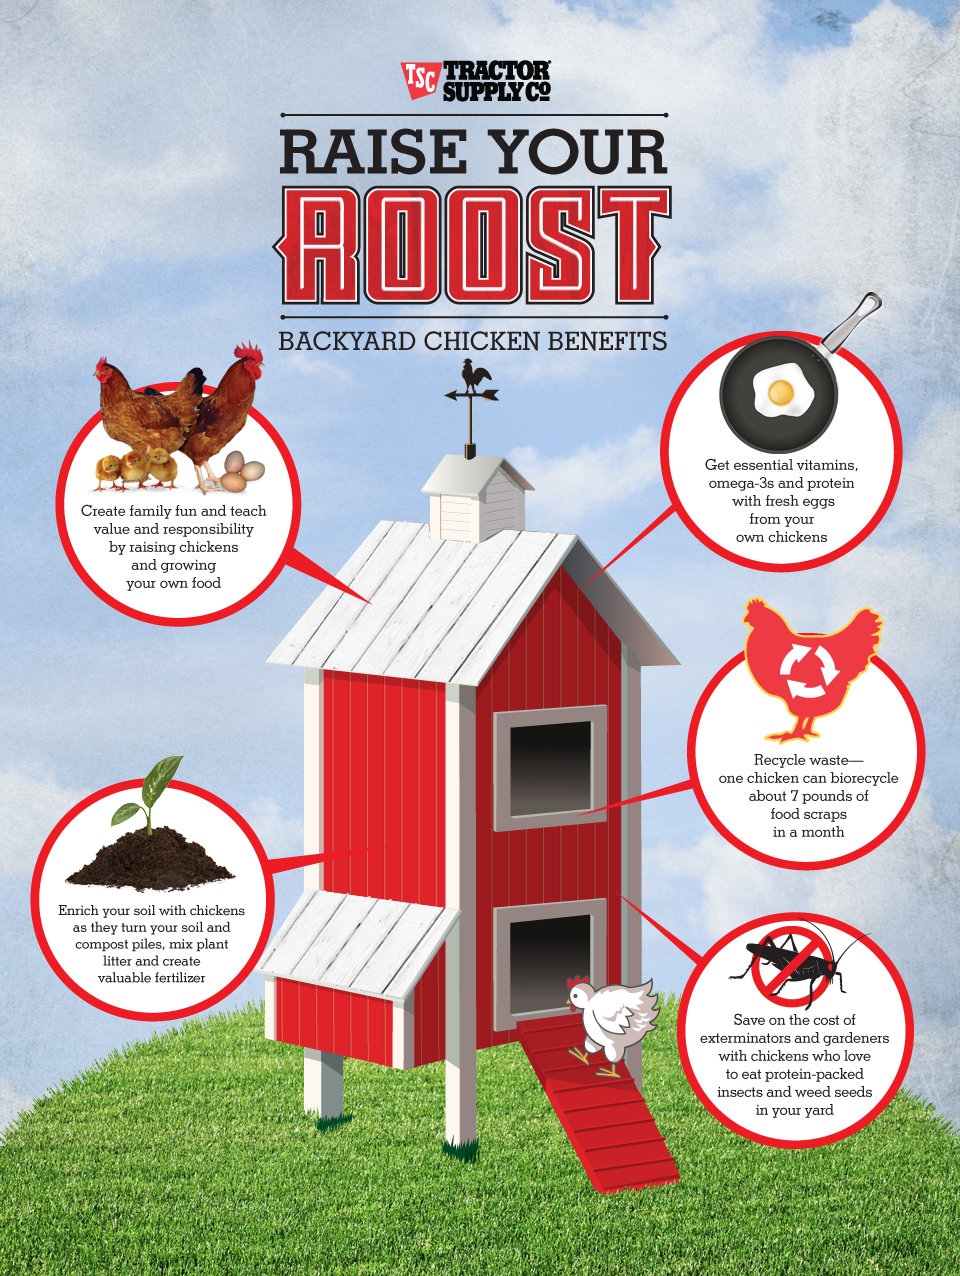 II. Benefits of Backyard Chicken Keeping